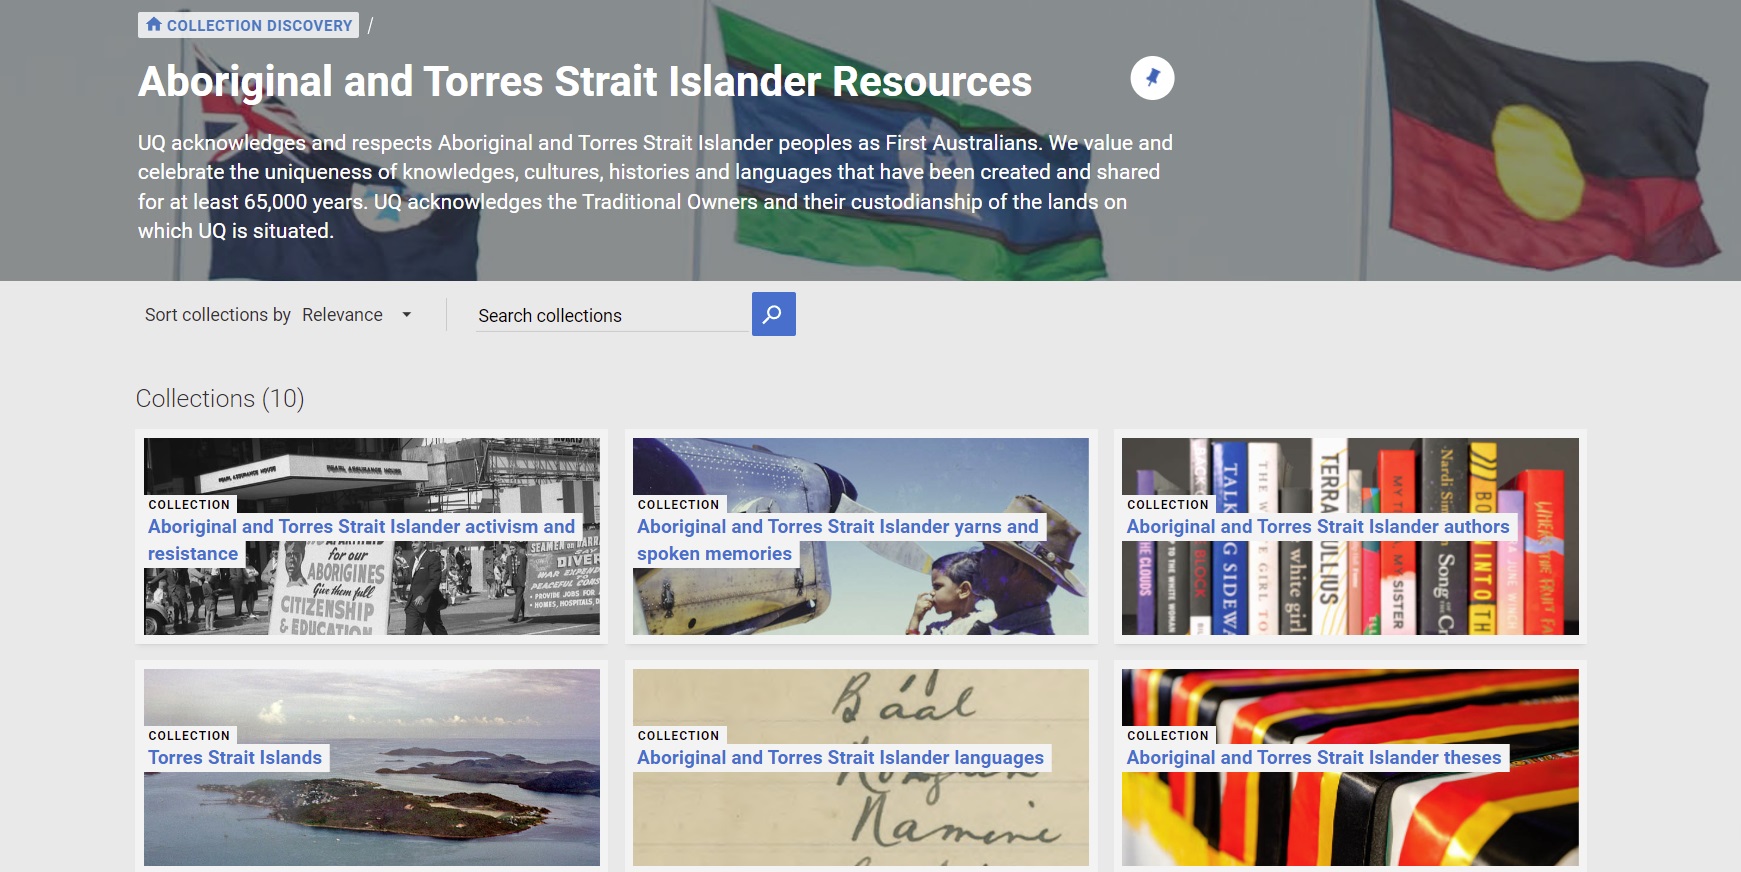 Ten collections featured within Aboriginal and Torres Strait Islander Resources